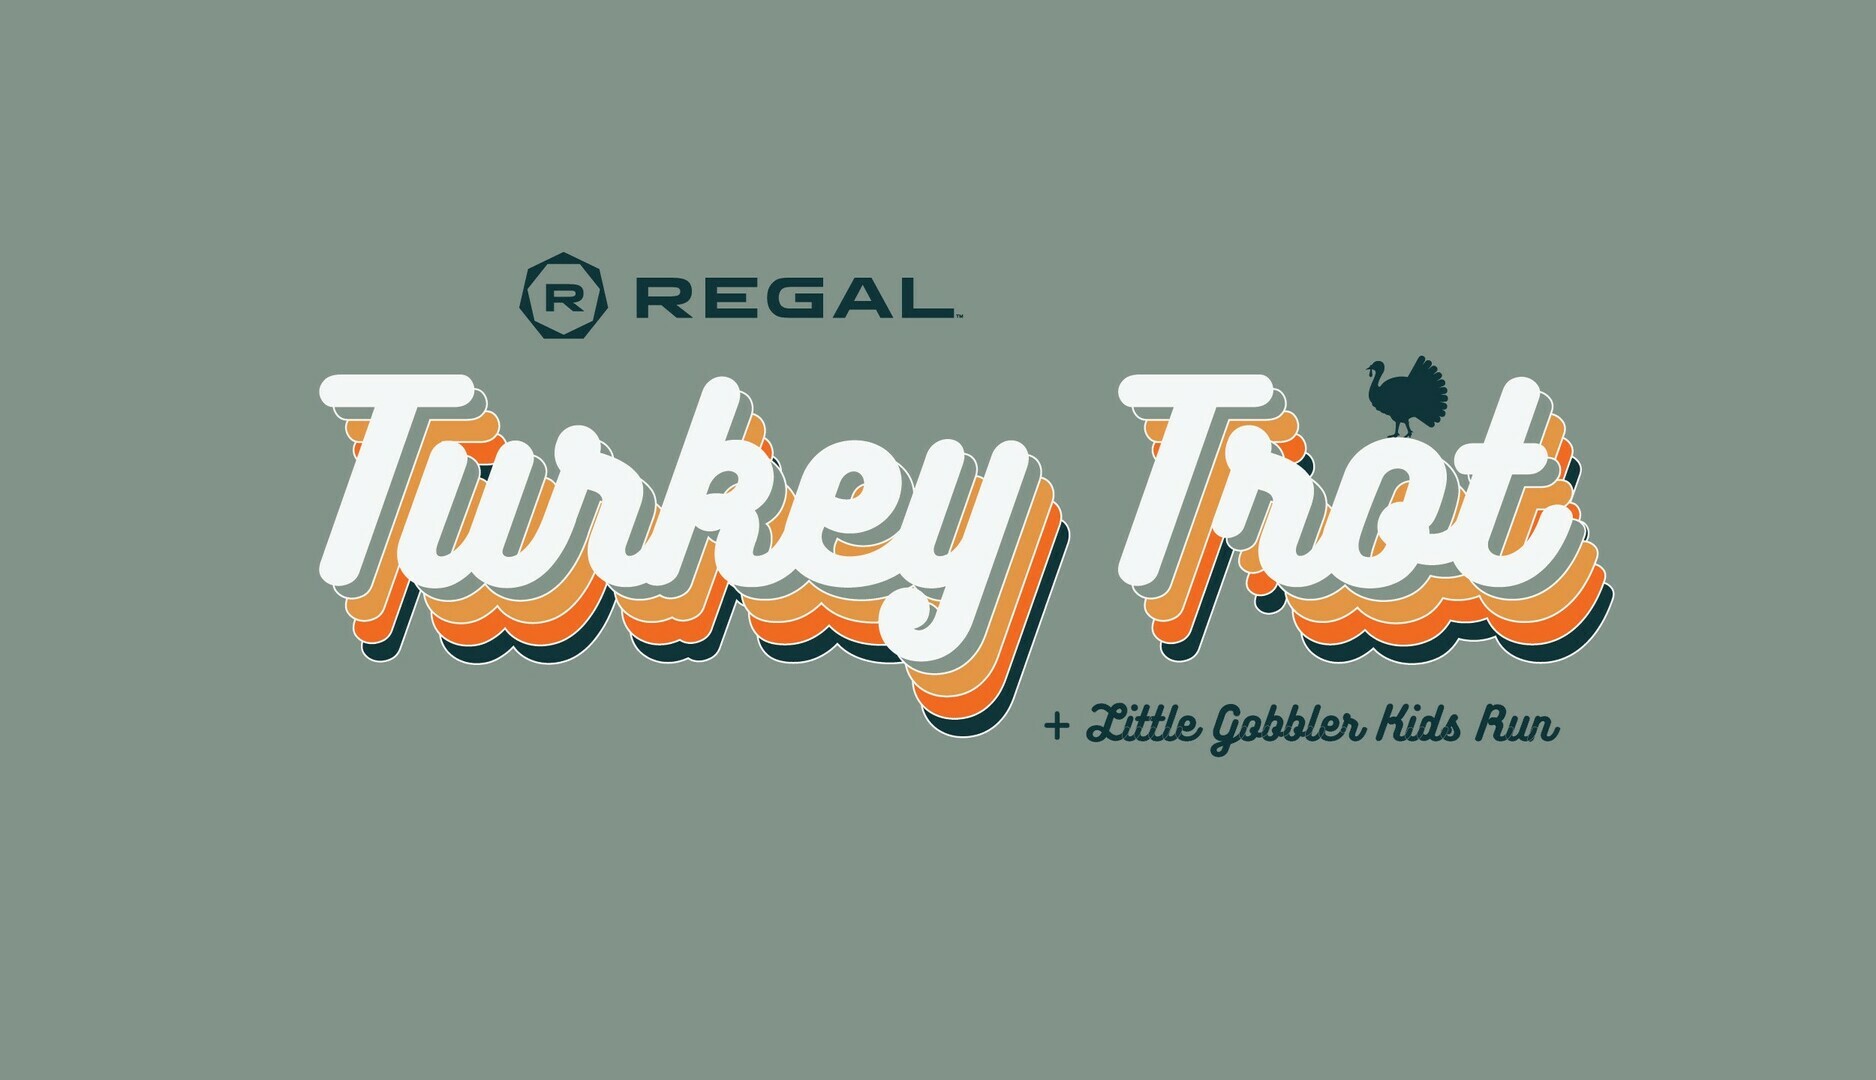 Regal Knoxville Turkey Trot 5K logo on RaceRaves